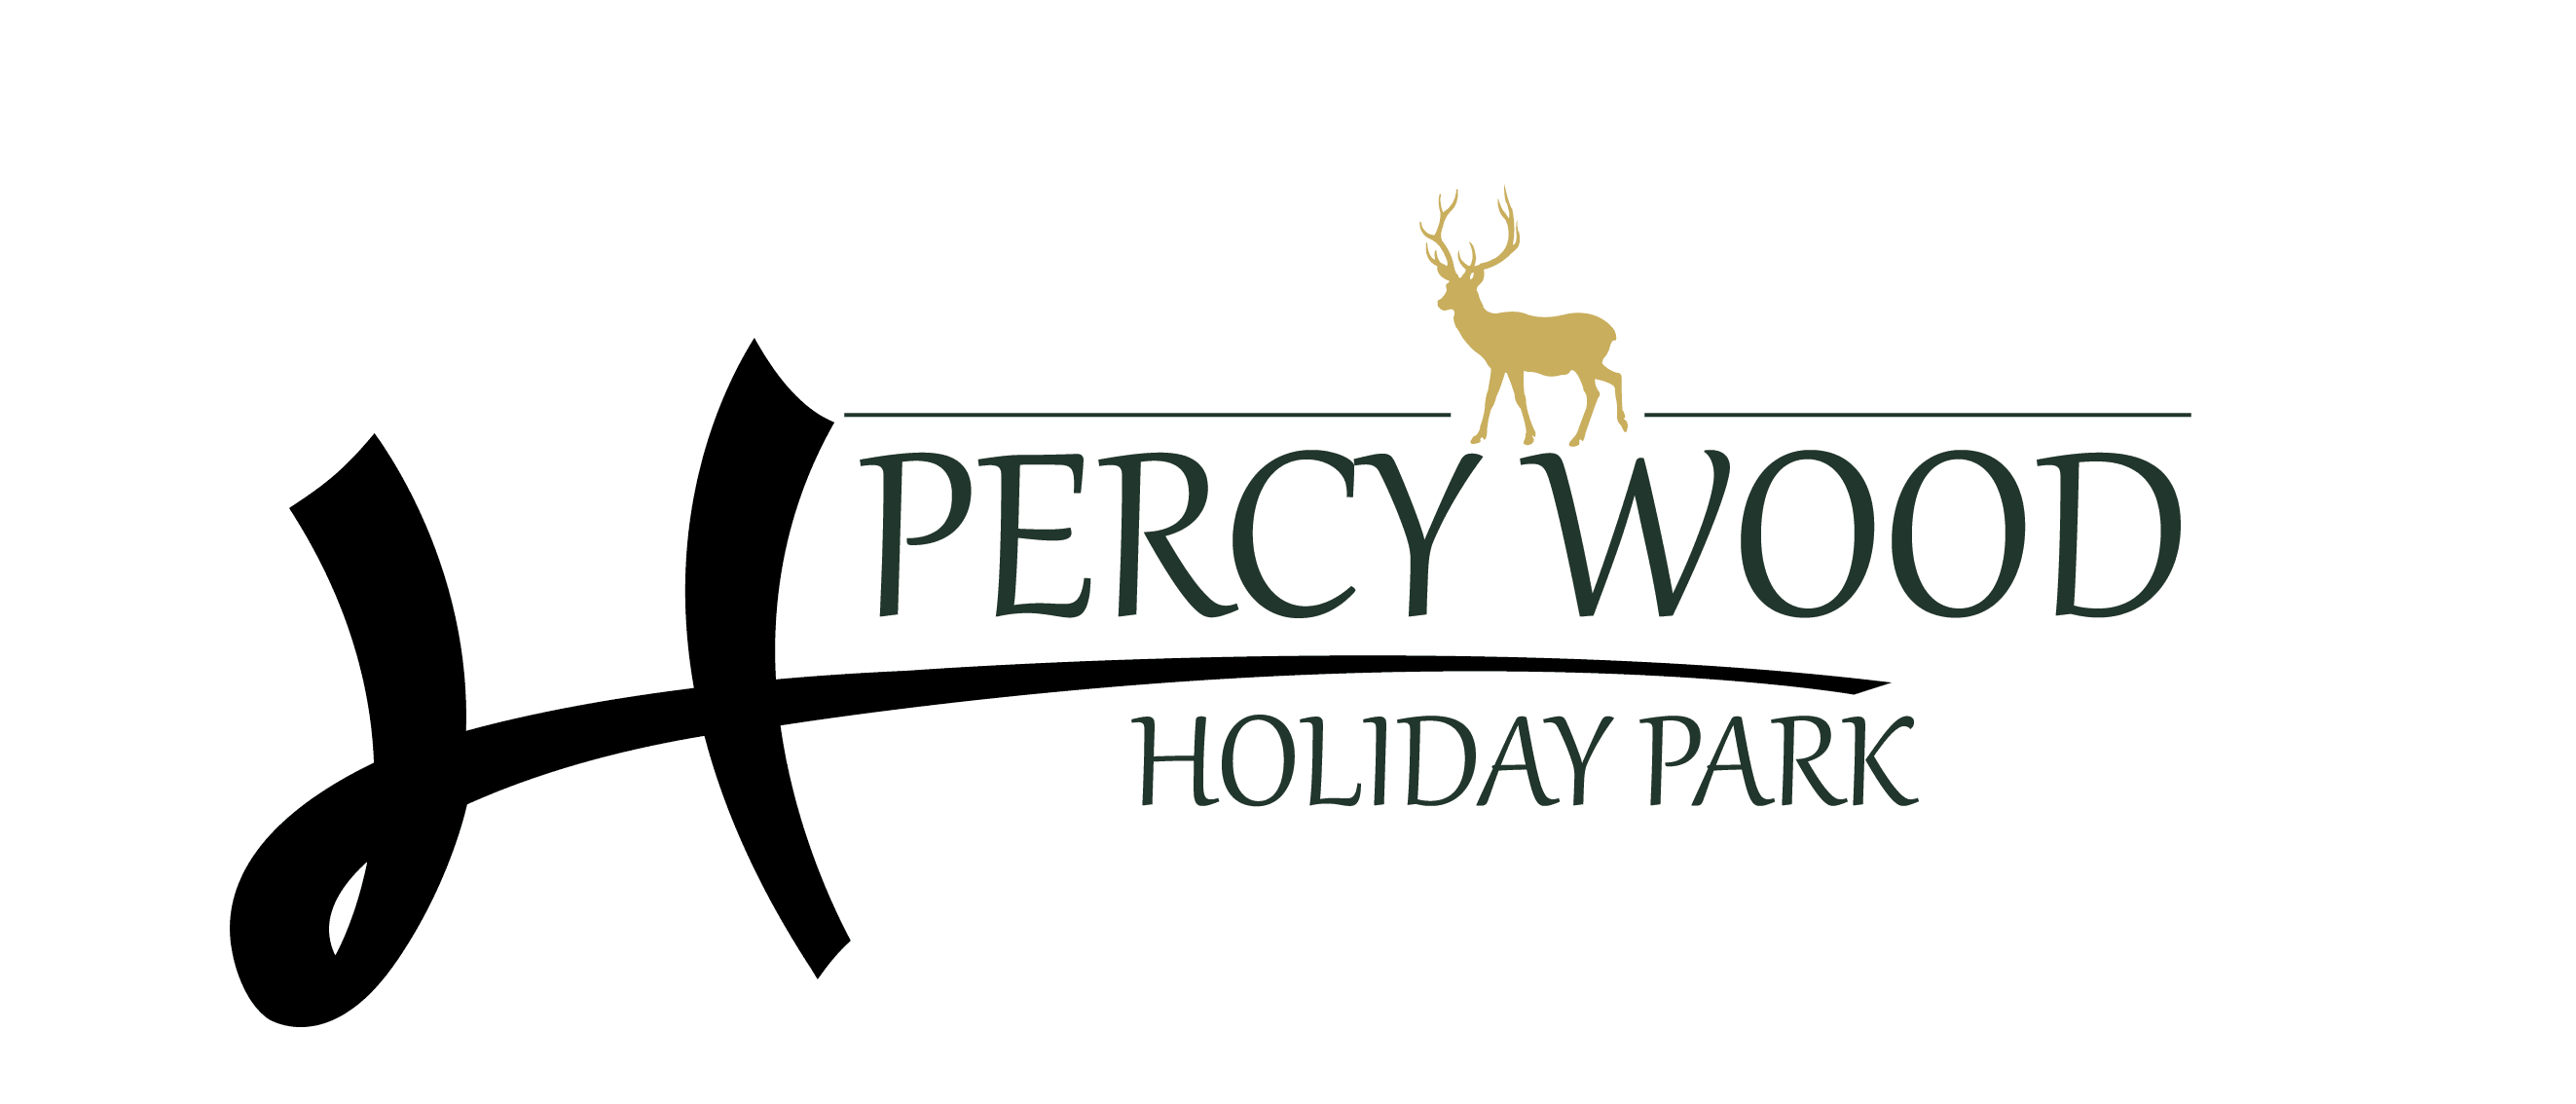 Percy Wood Holiday Park